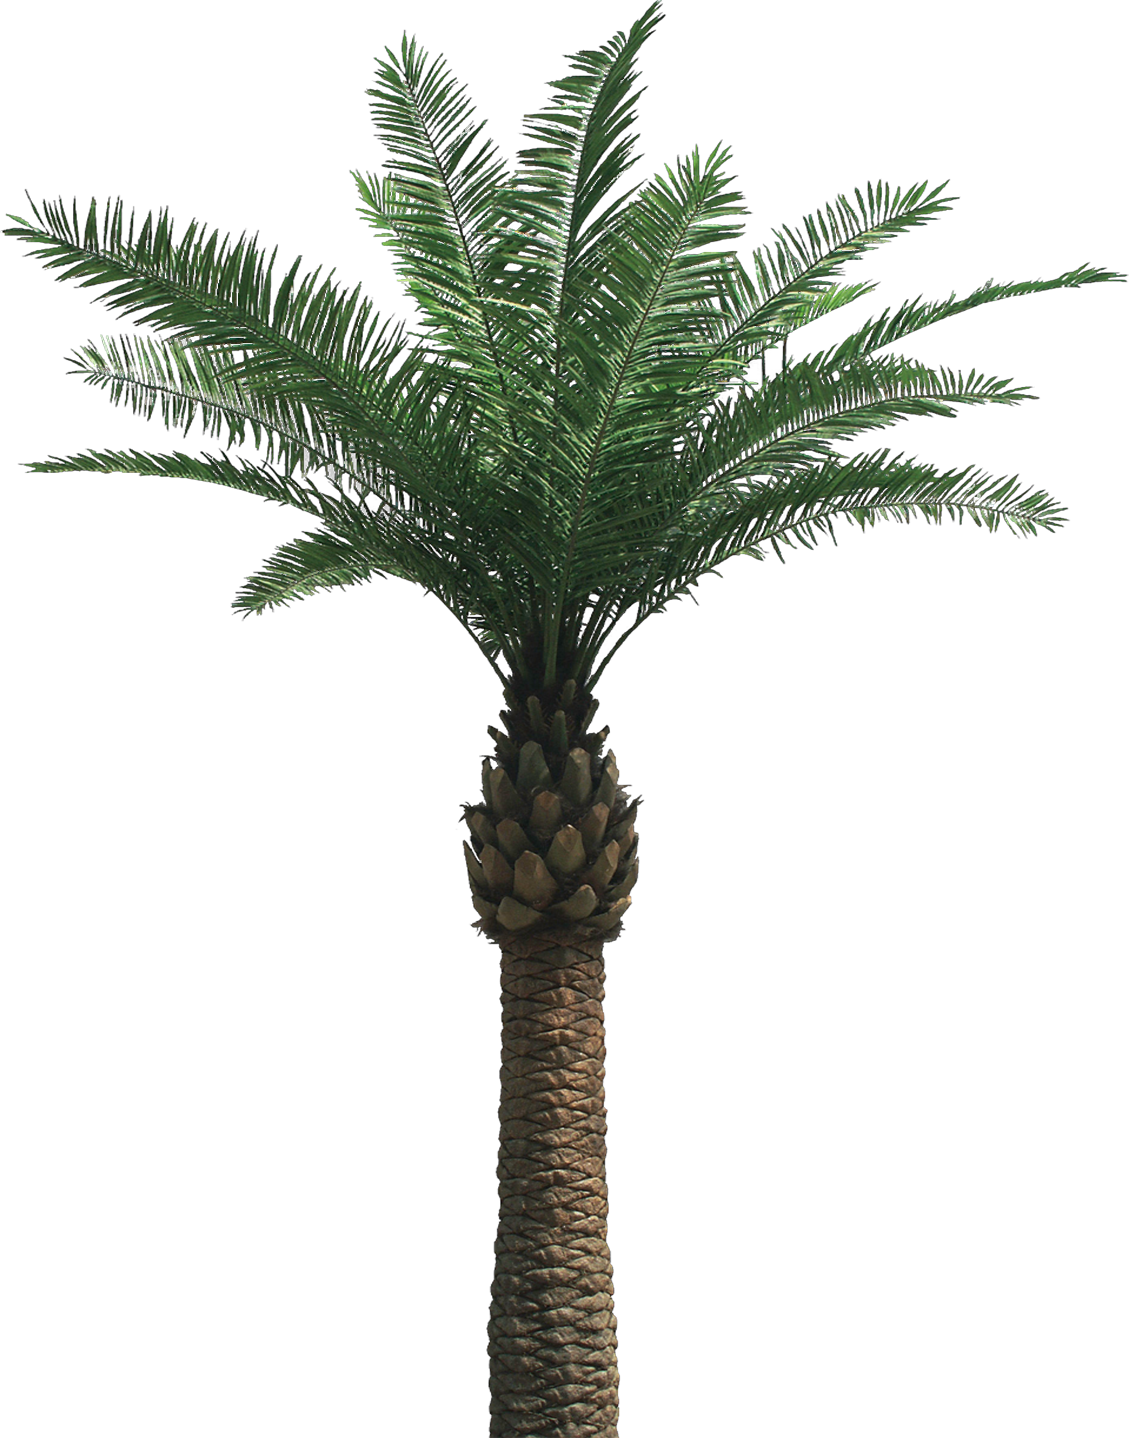 Explore Palm Trees, Palms, an